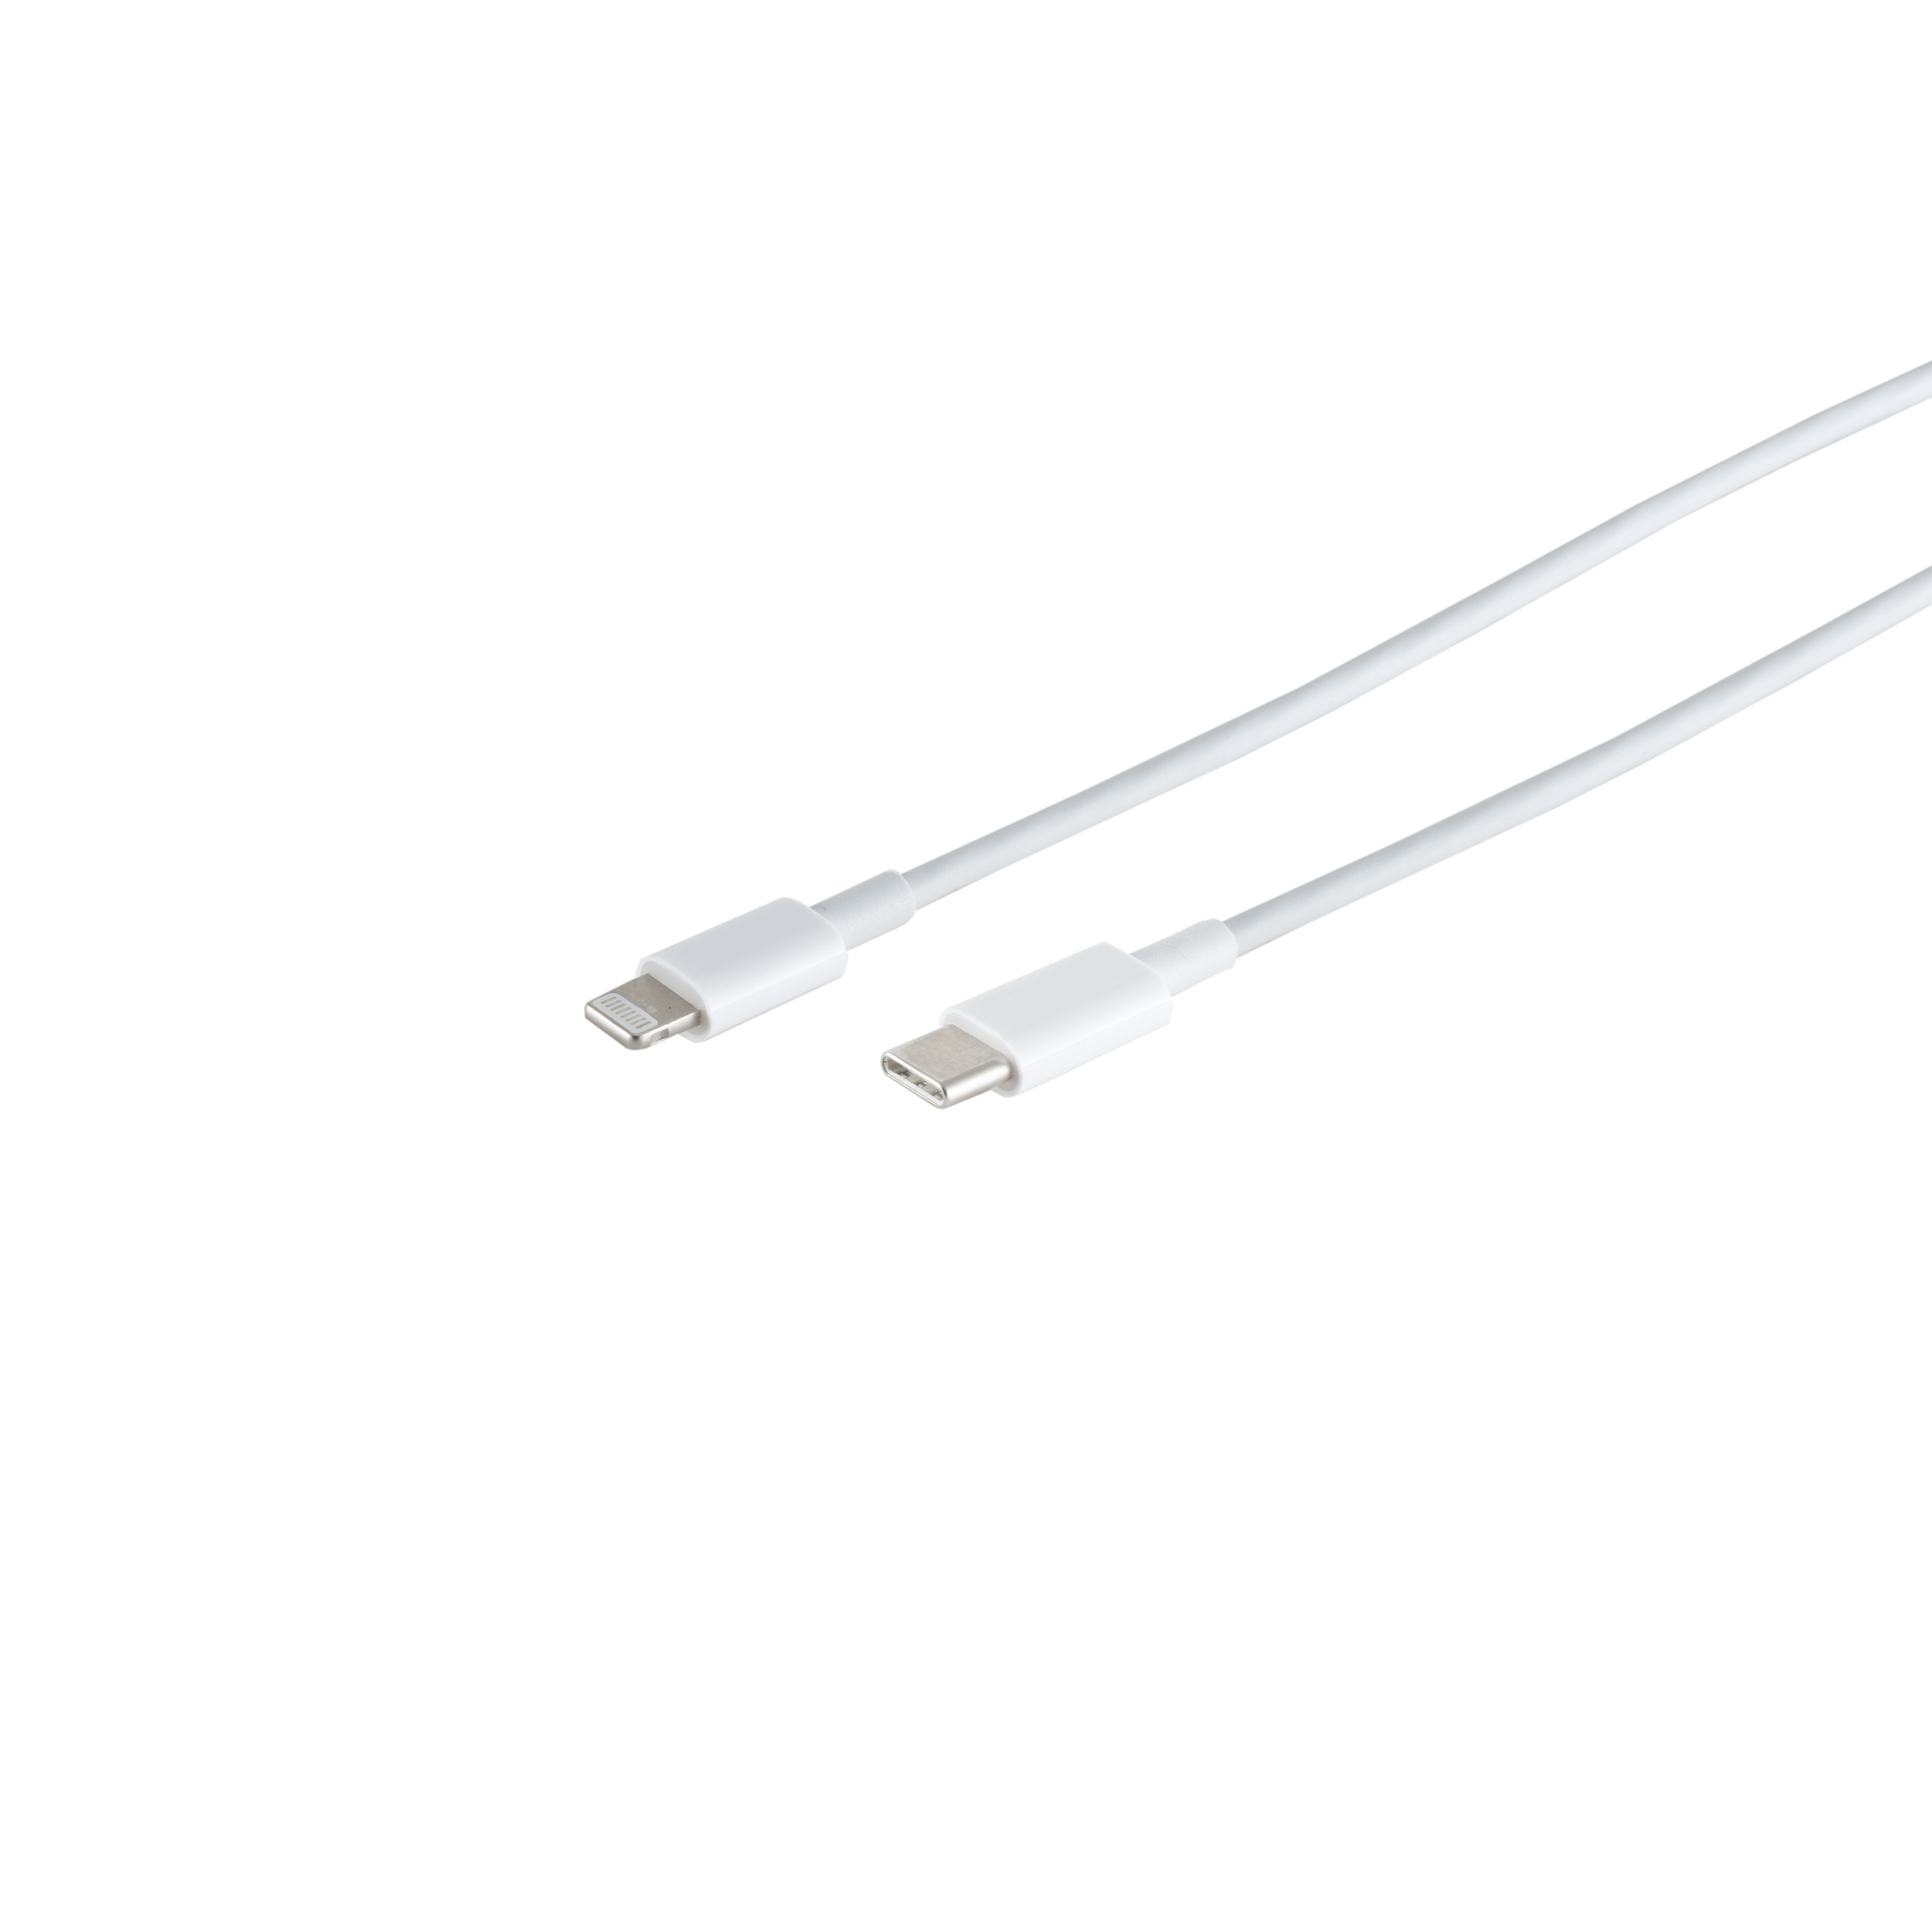 S/CONN USB MAXIMUM USB-C® Stecker, Kabel Kabel, 0,5m CONNECTIVITY 8-pin Stecker Lade auf